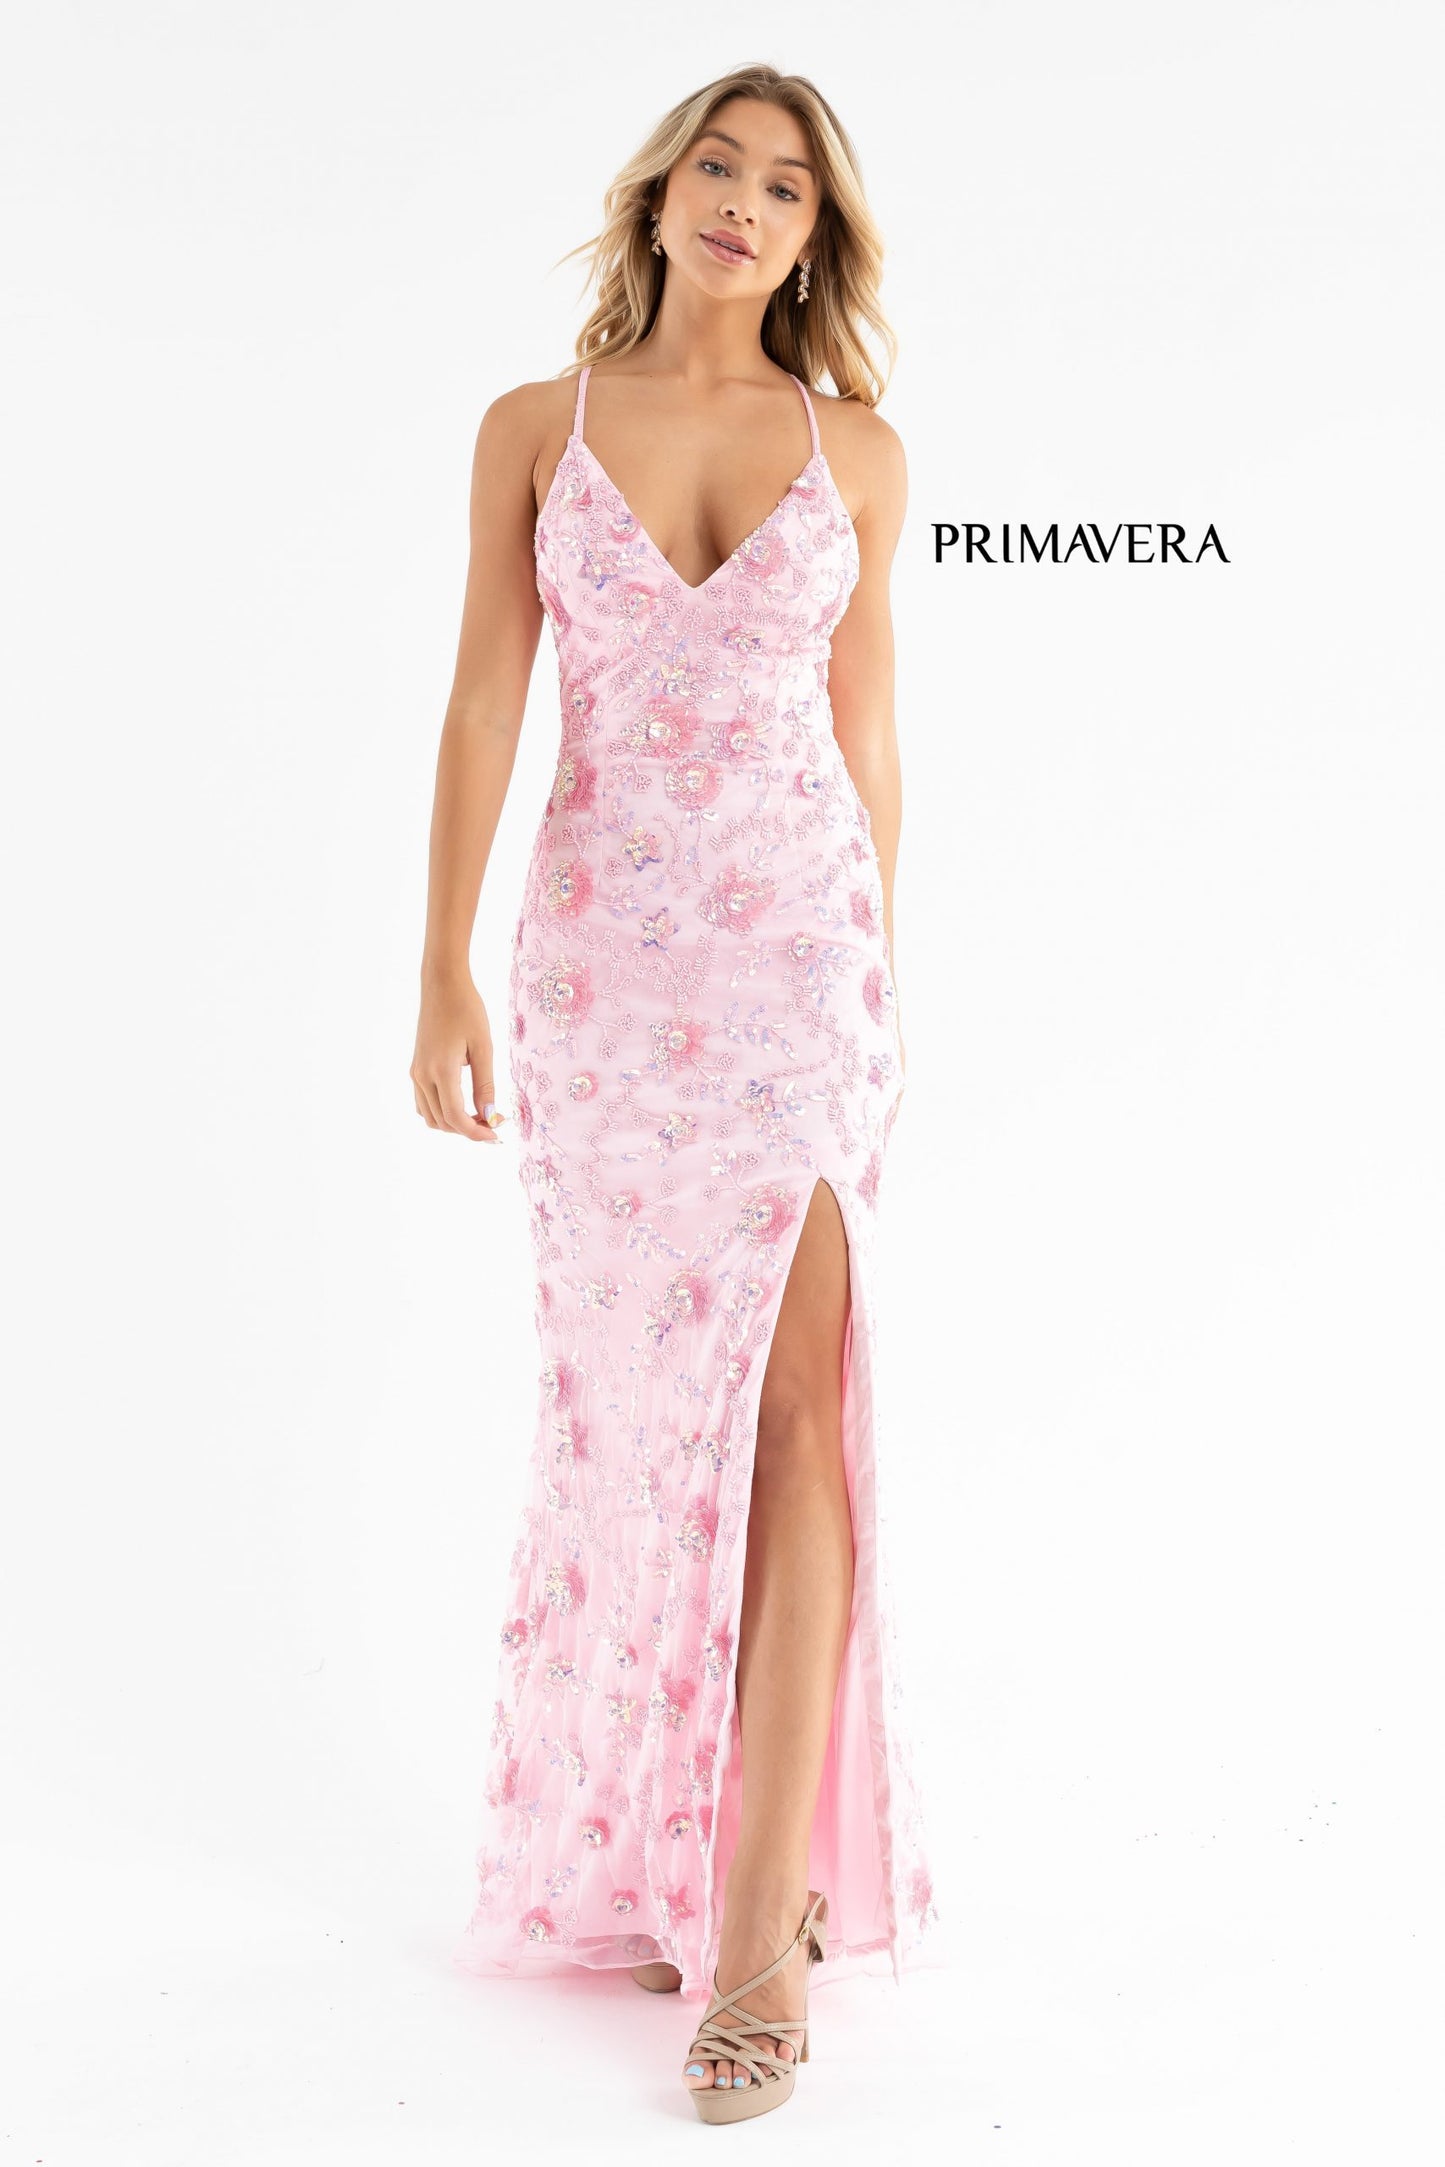 Primavera Couture 3731 Size 0 3D Flowers Prom Dress Sequins with a V Neckline Slit Open Back